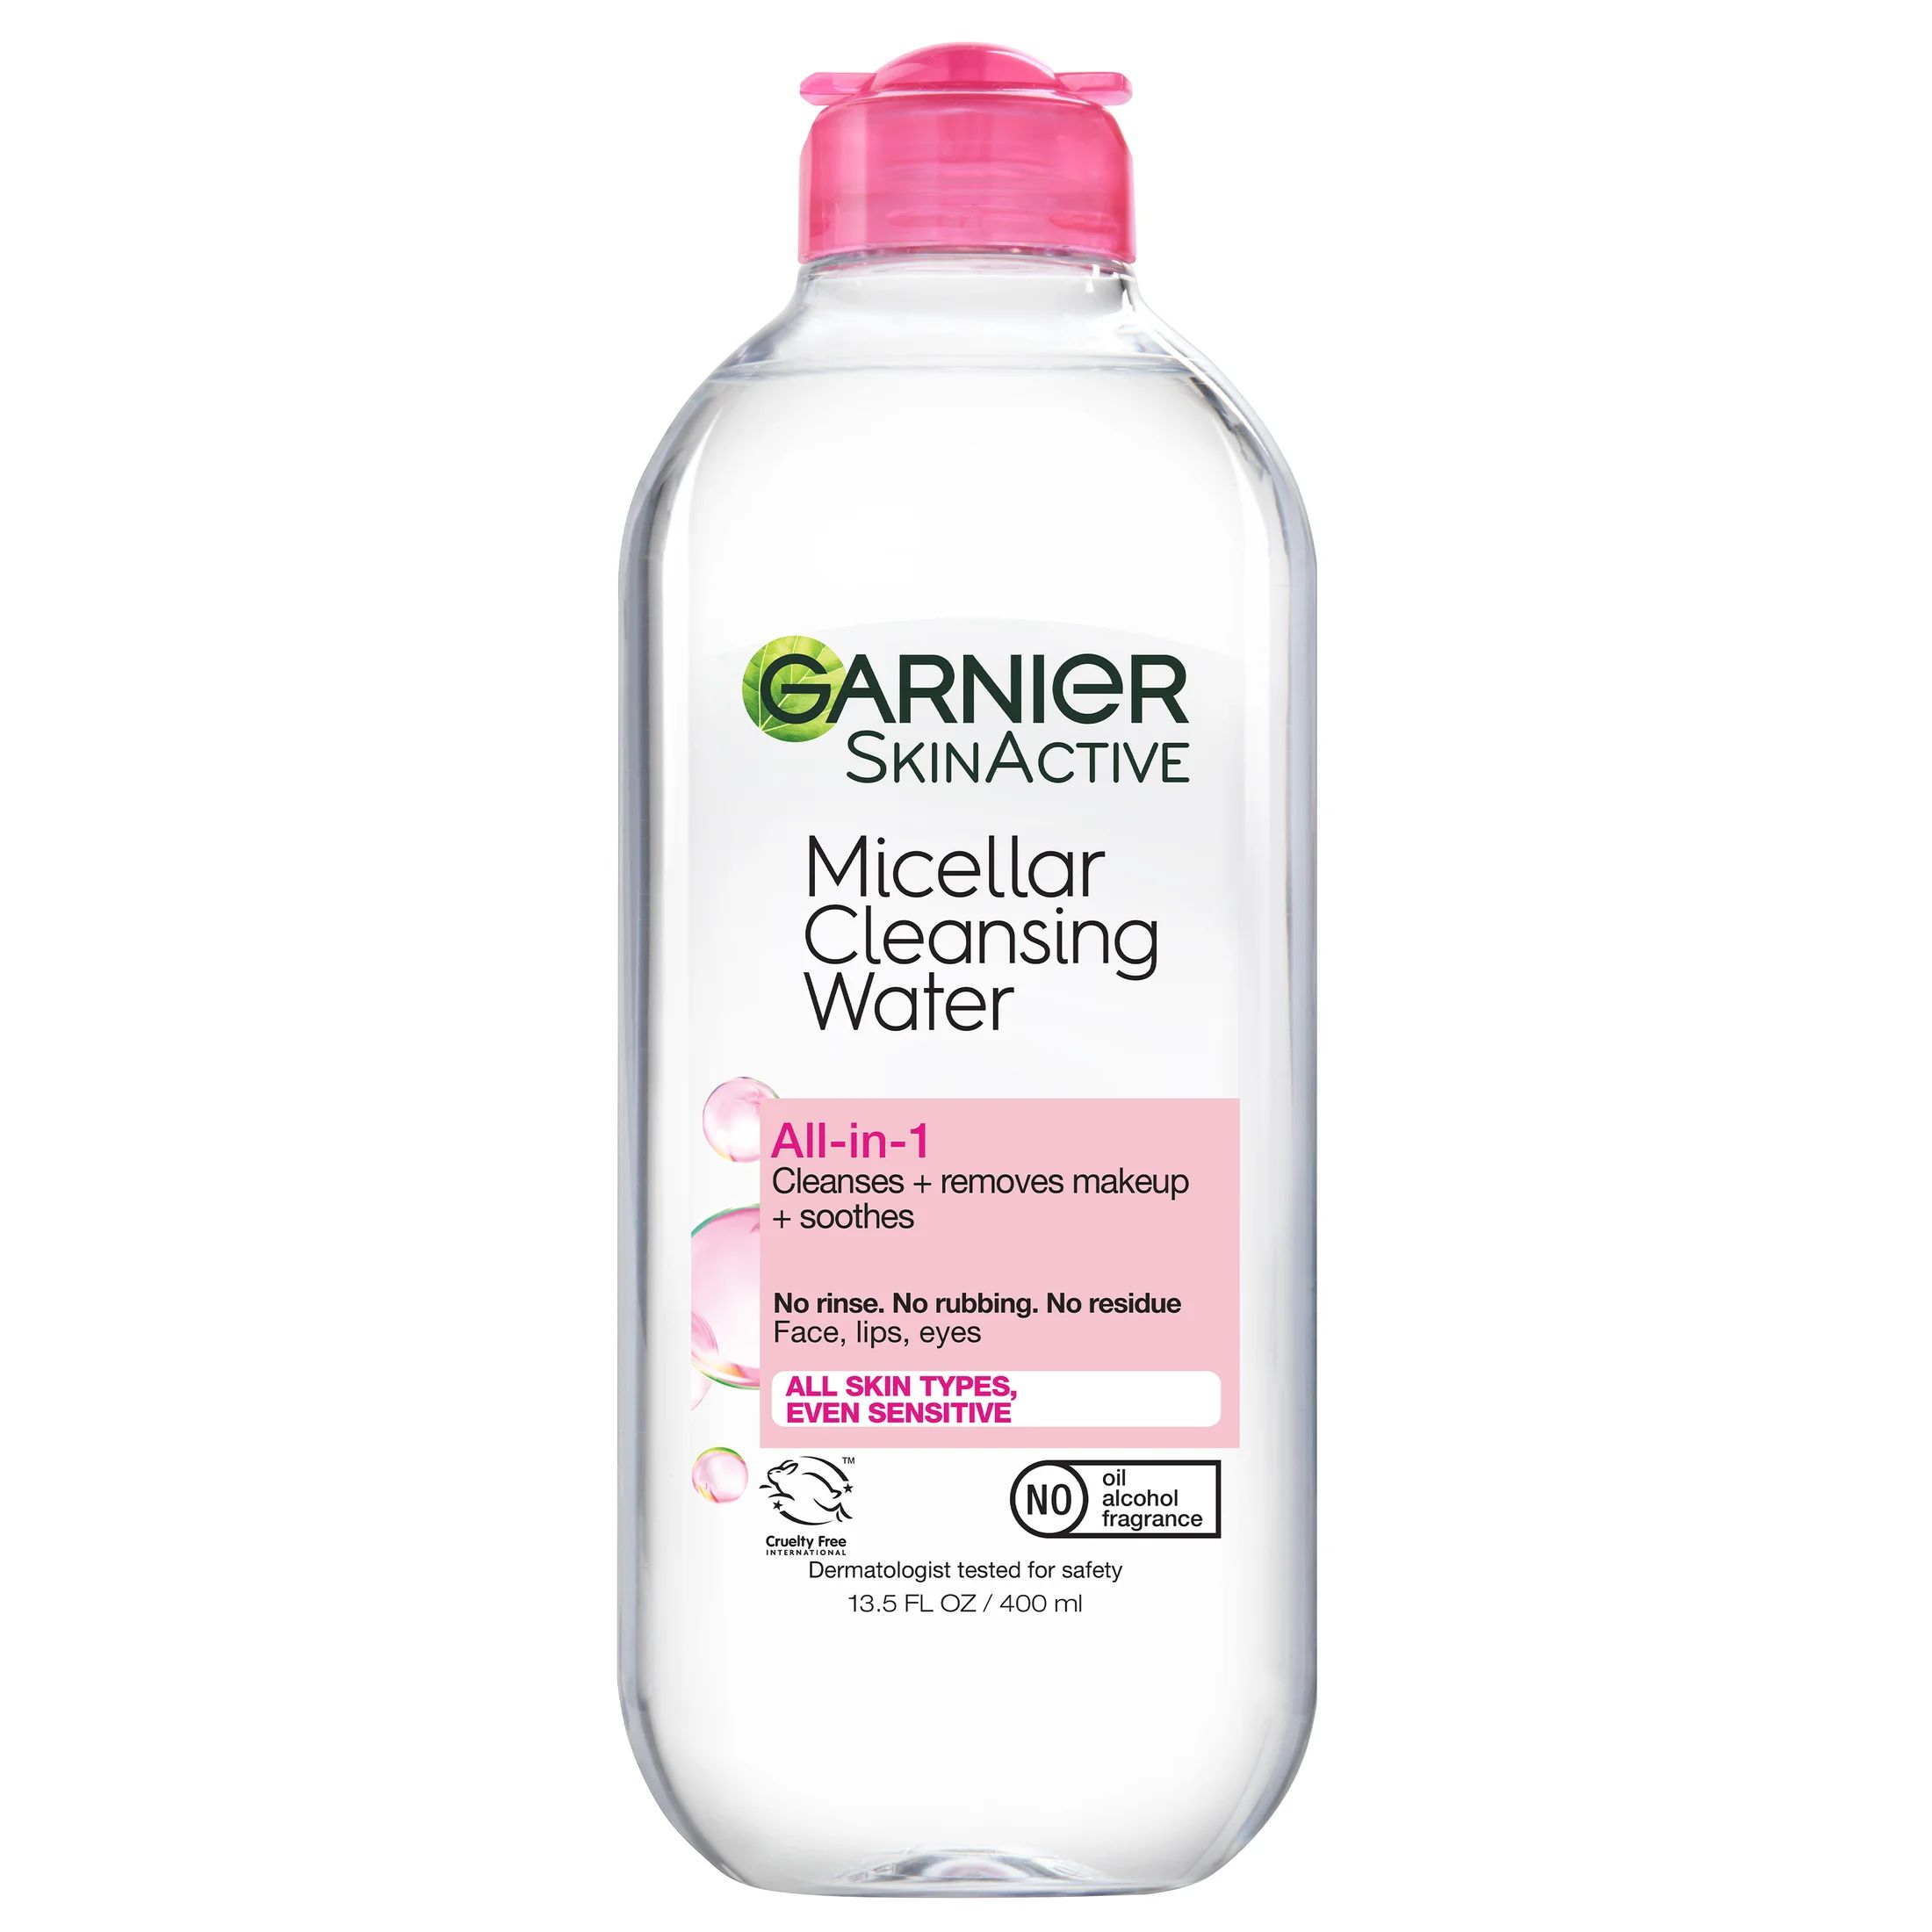 Garnier SkinActive Micellar Cleansing Water All in 1 Makeup Remover Cleanses, 13.5 fl oz | Walmart (US)